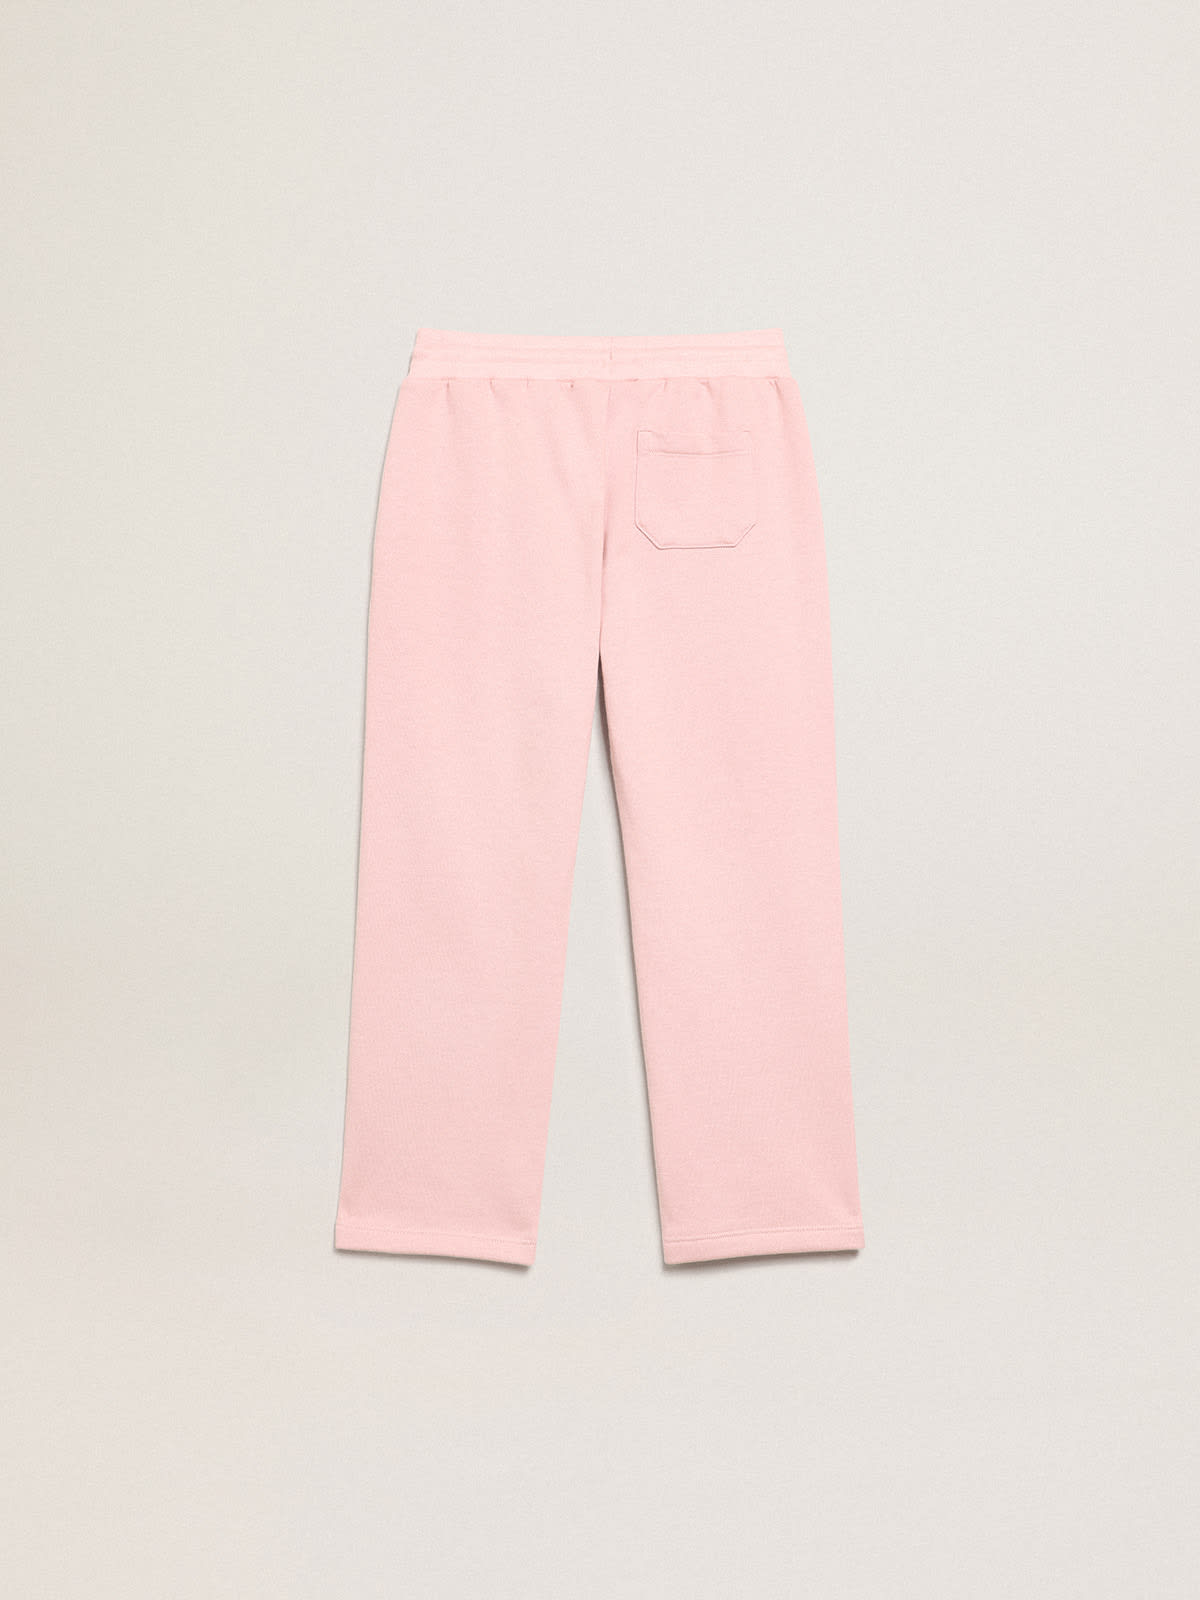 Golden Goose - Calça de jogging rosa com estrela de glitter na frente in 